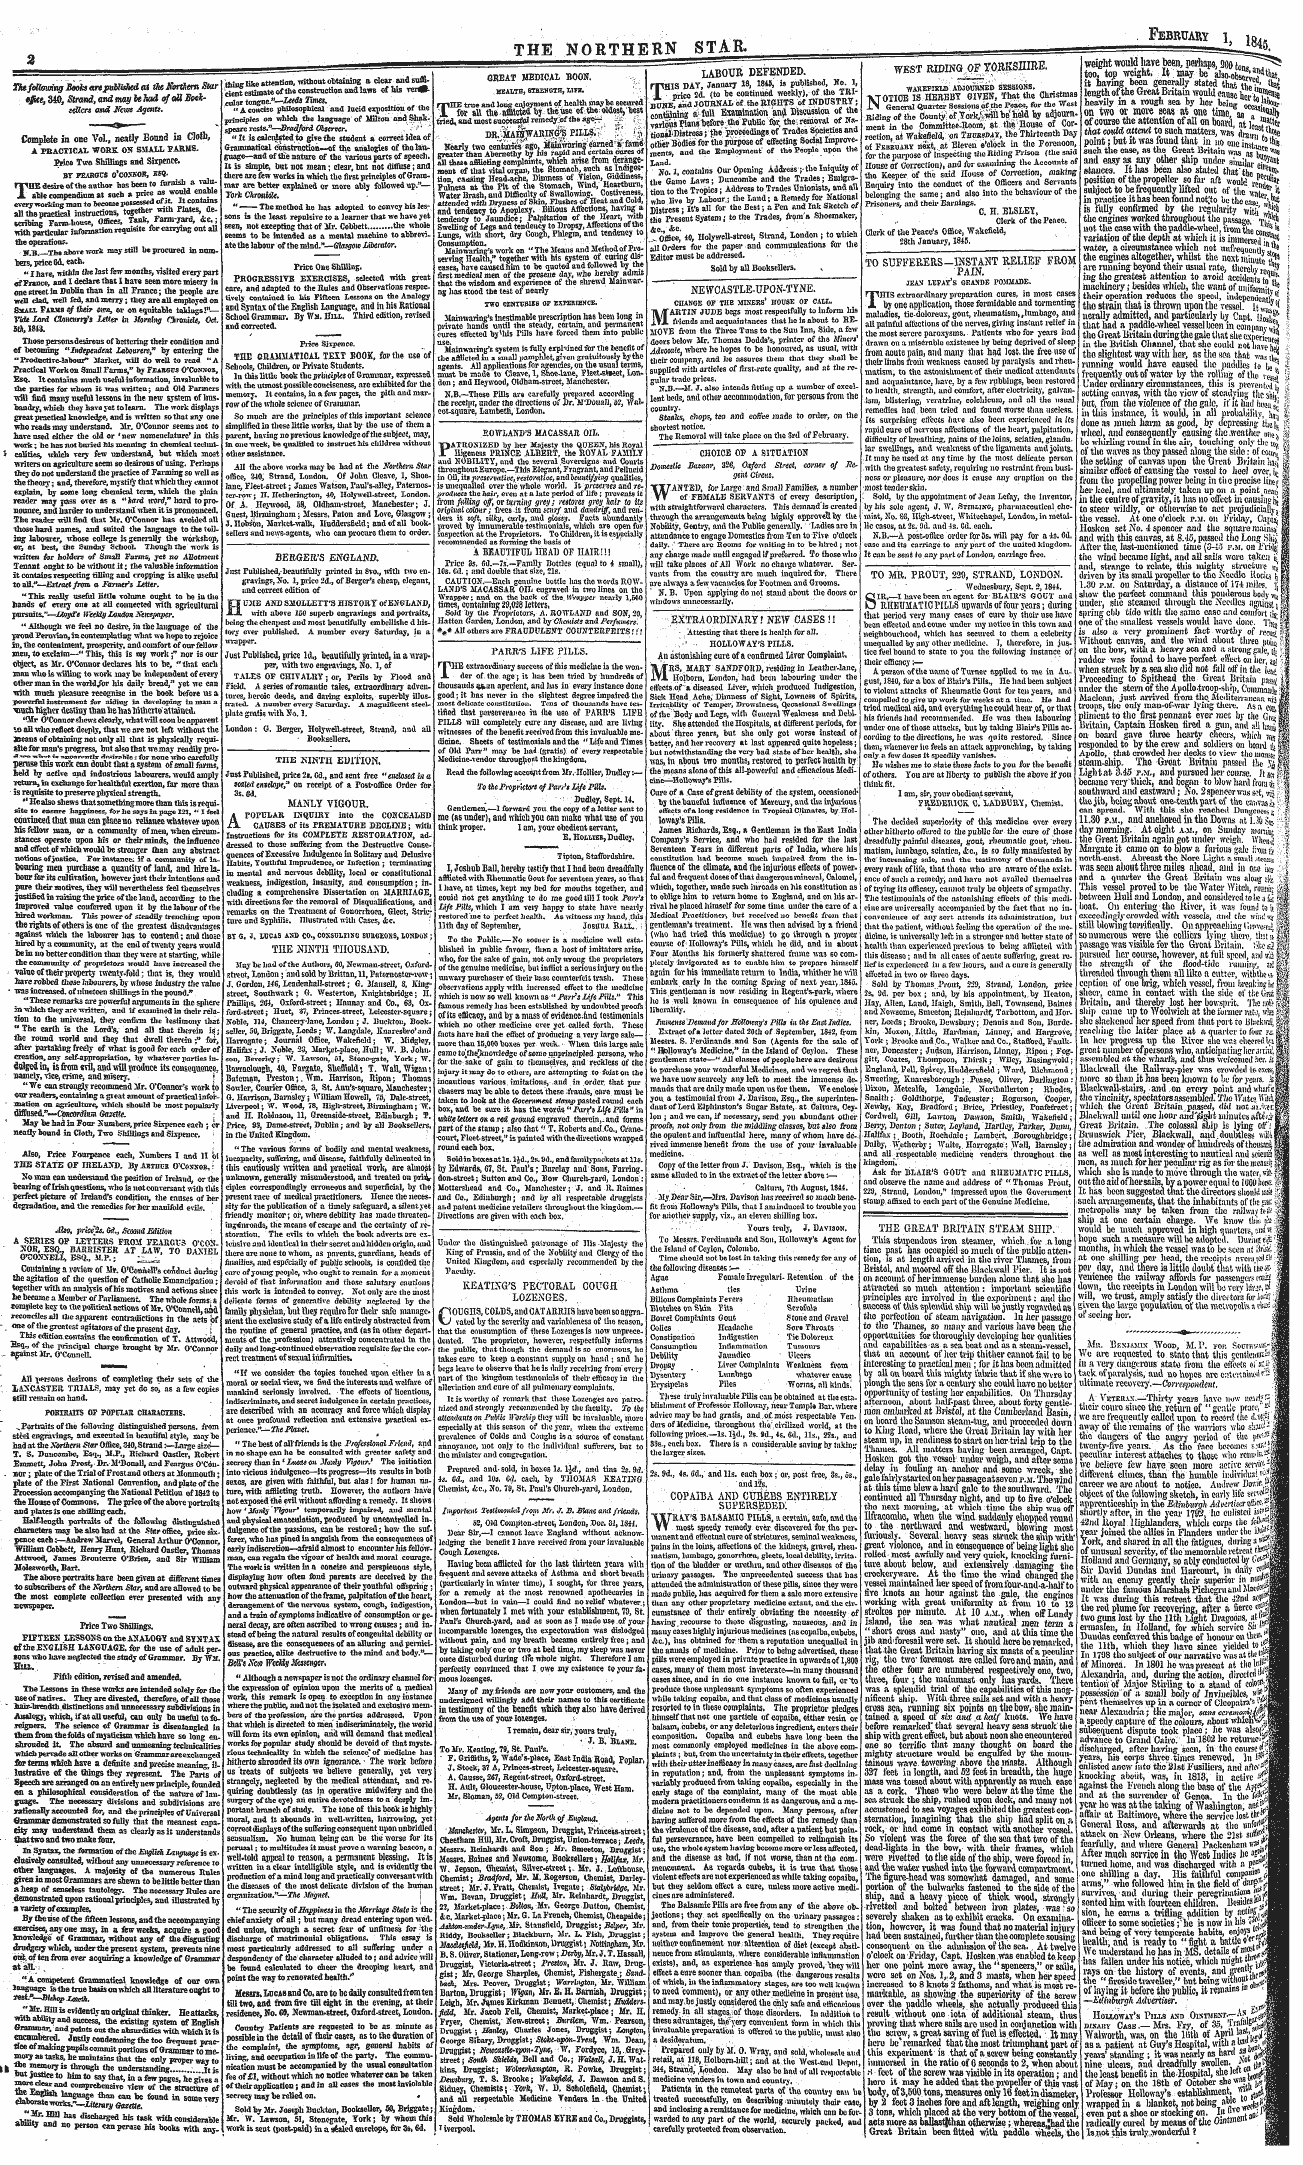 Northern Star (1837-1852): jS F Y, 3rd edition - Ad00224